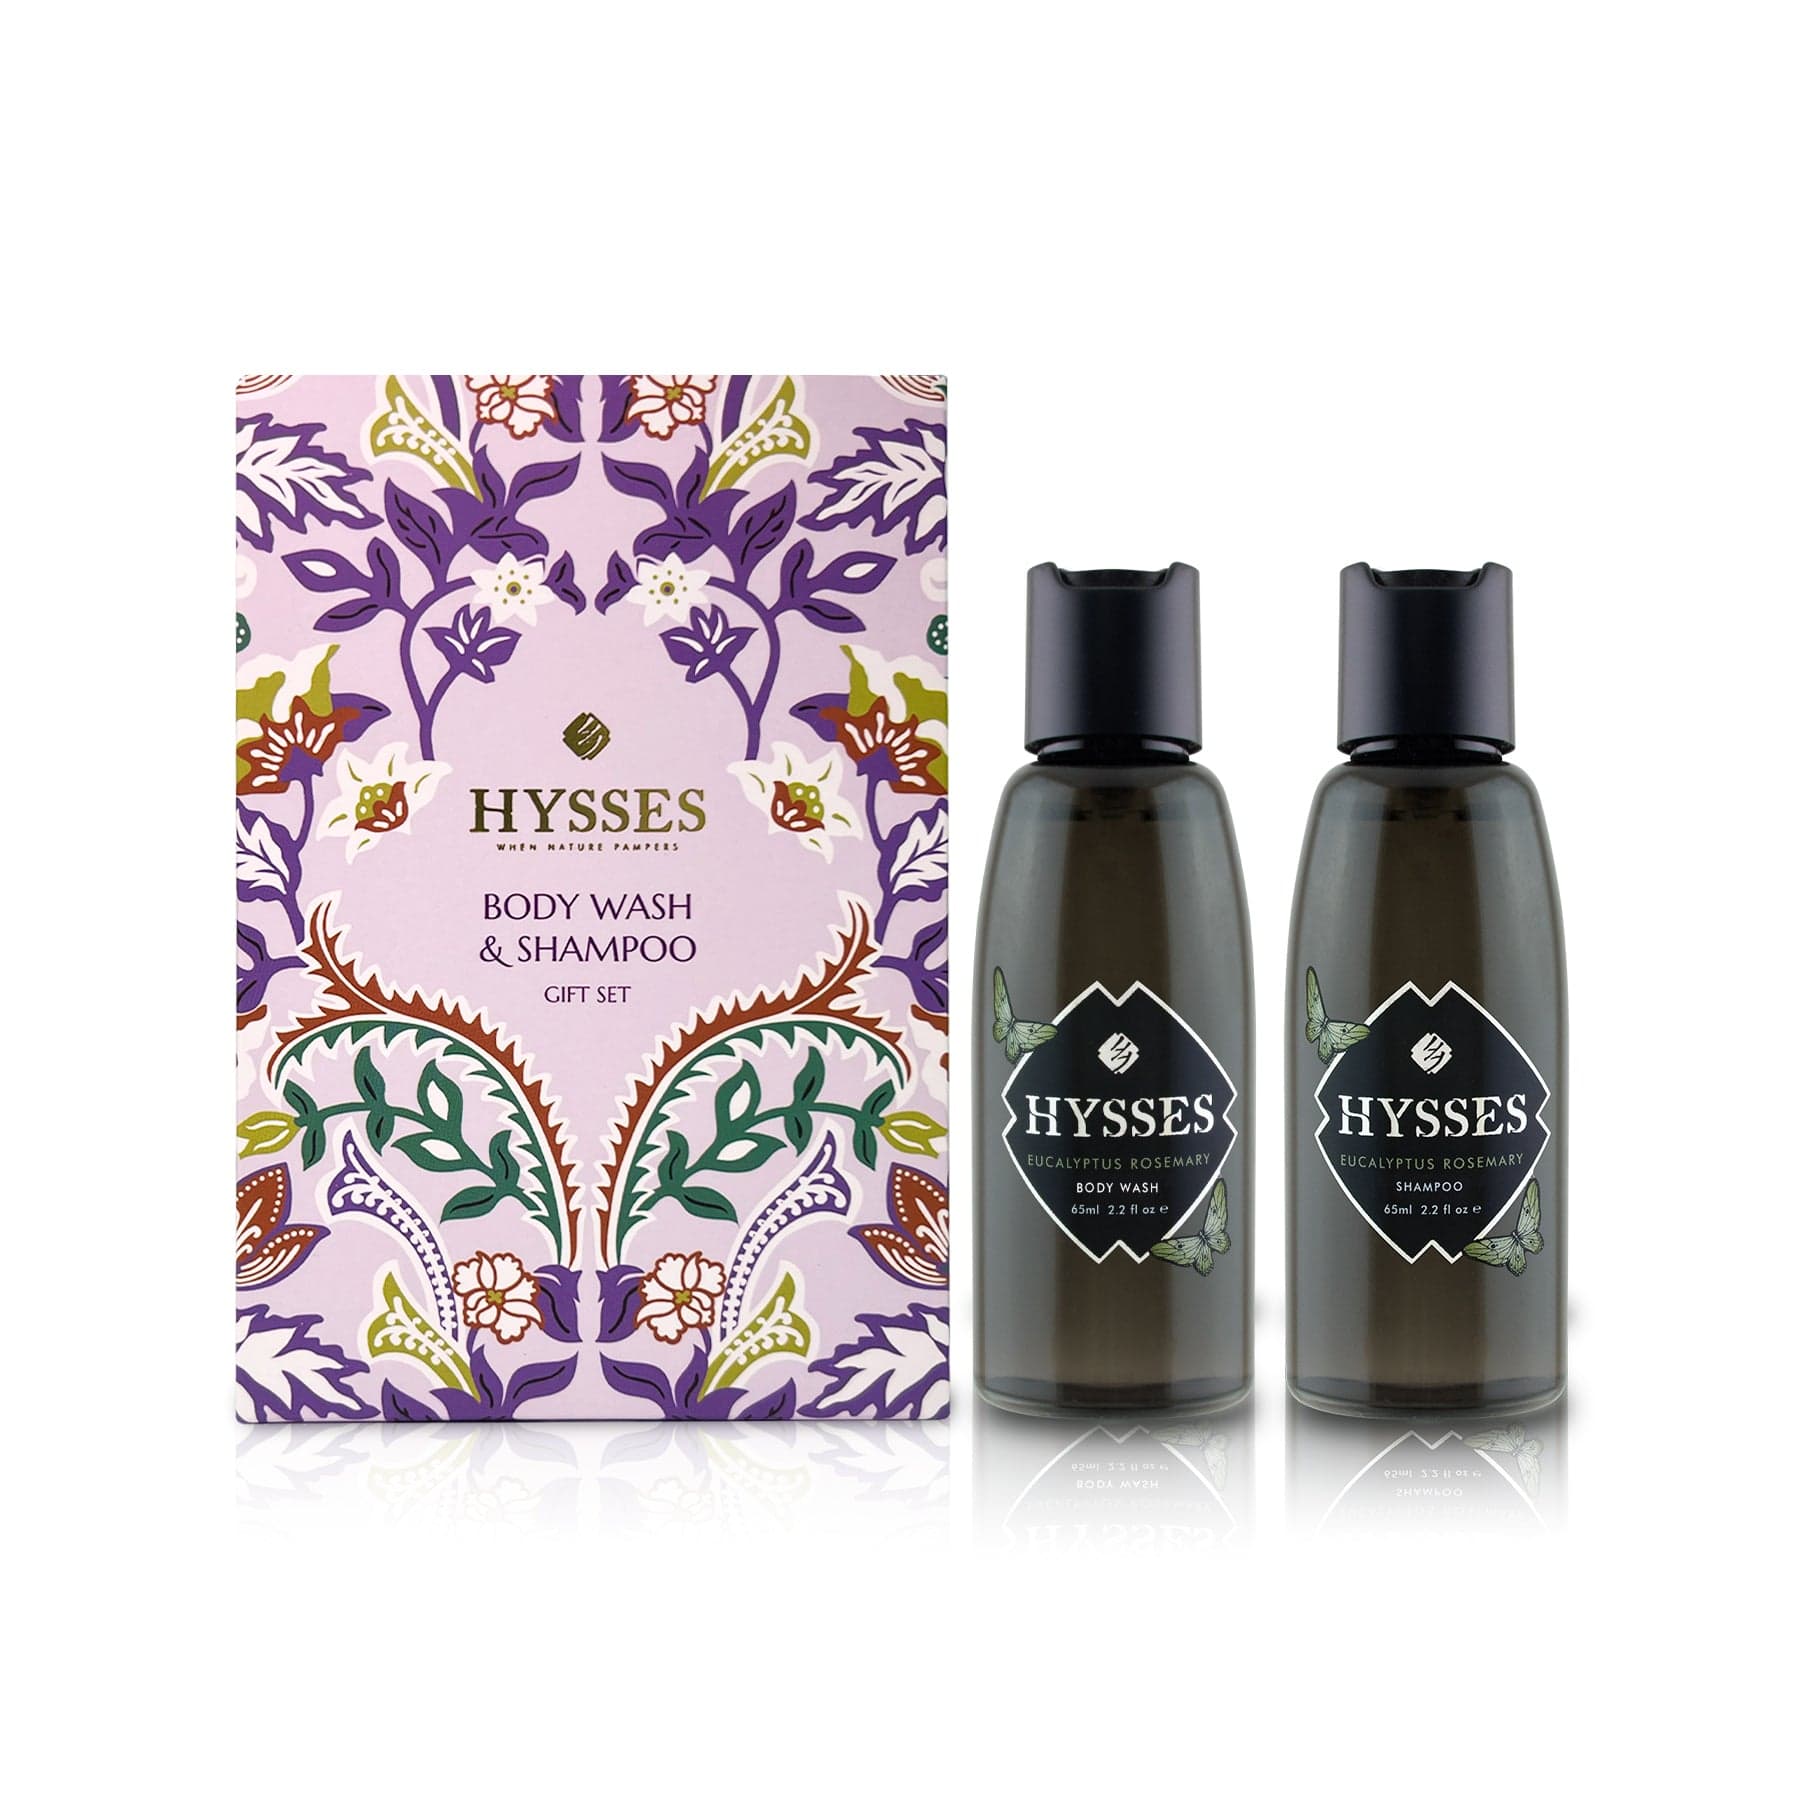 Hysses Body Care Eucalyptus Rosemary Travel Gift Set (Body Wash & Shampoo) Eucalyptus Rosemary